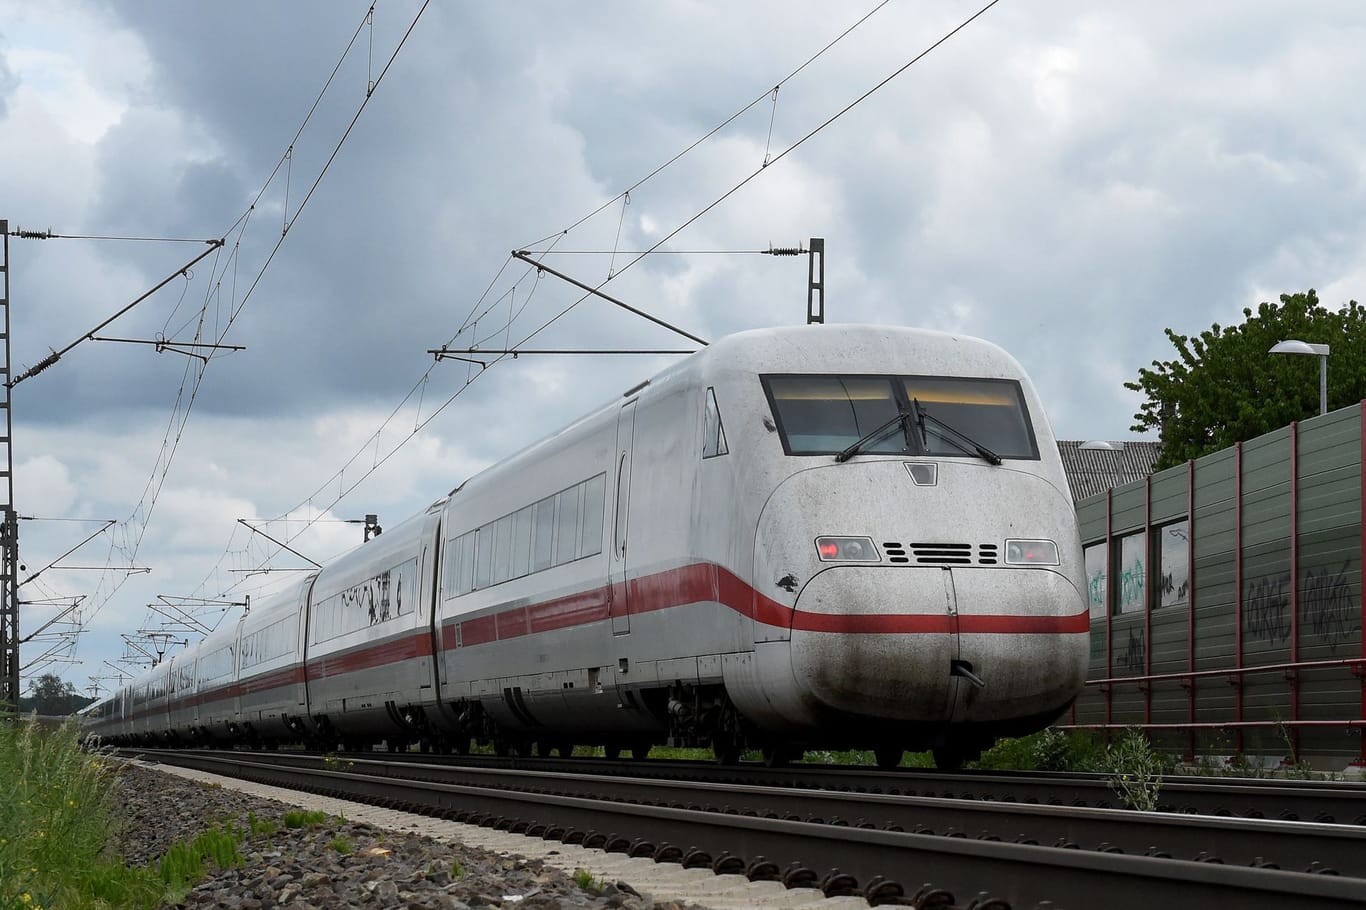 ICE-Strecke Bielefeld-Hannover